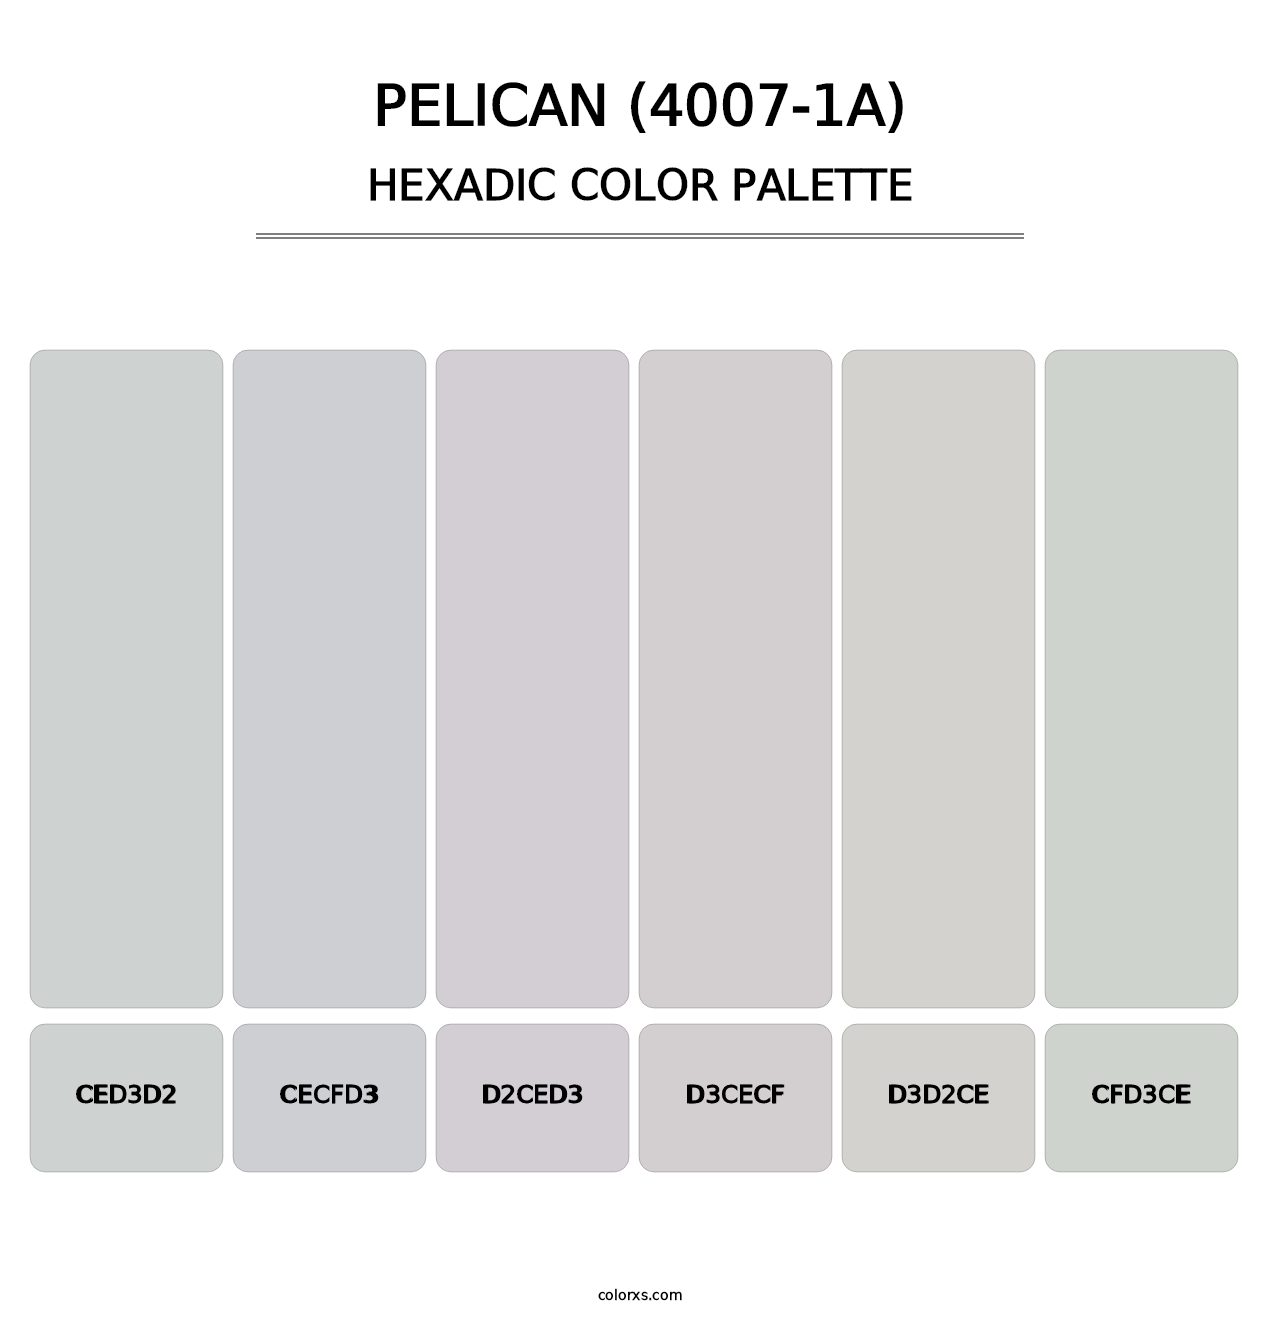 Pelican (4007-1A) - Hexadic Color Palette